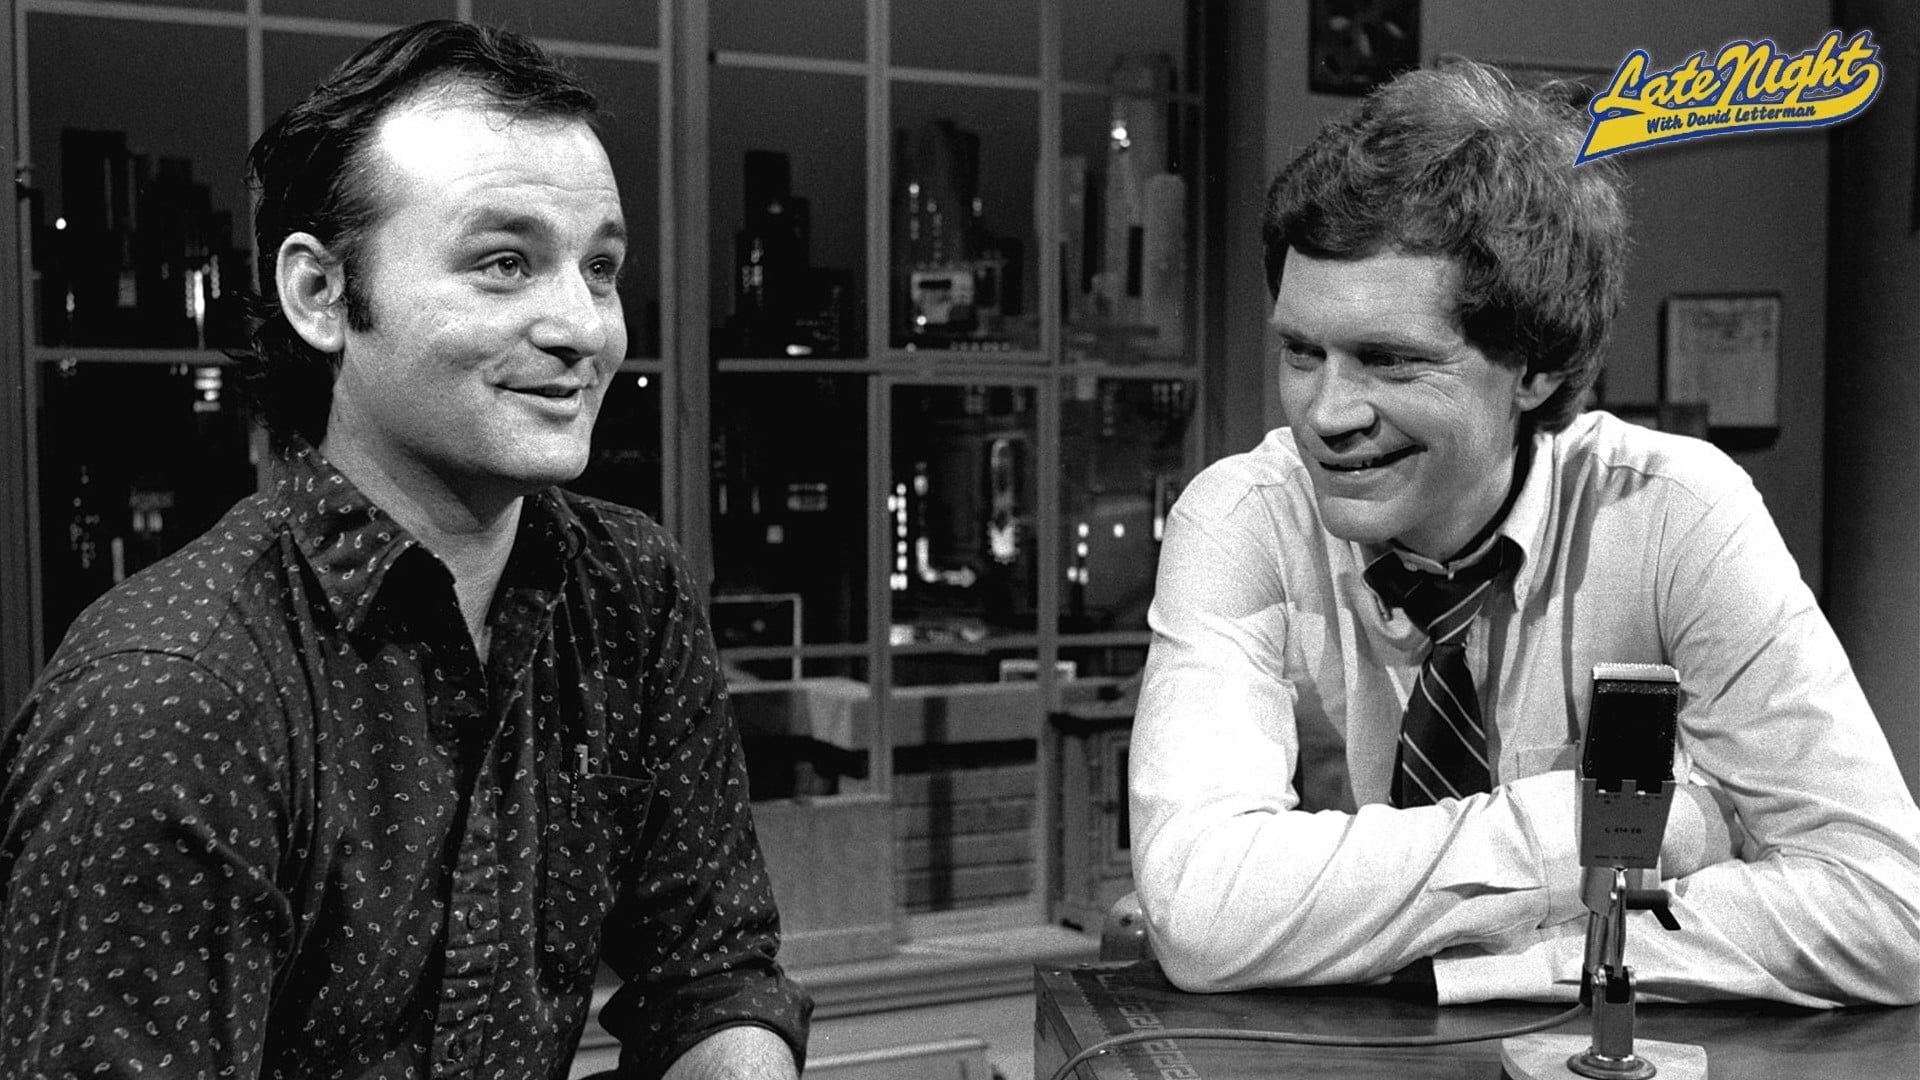 Late Night with David Letterman - Staffel 2 (1970)